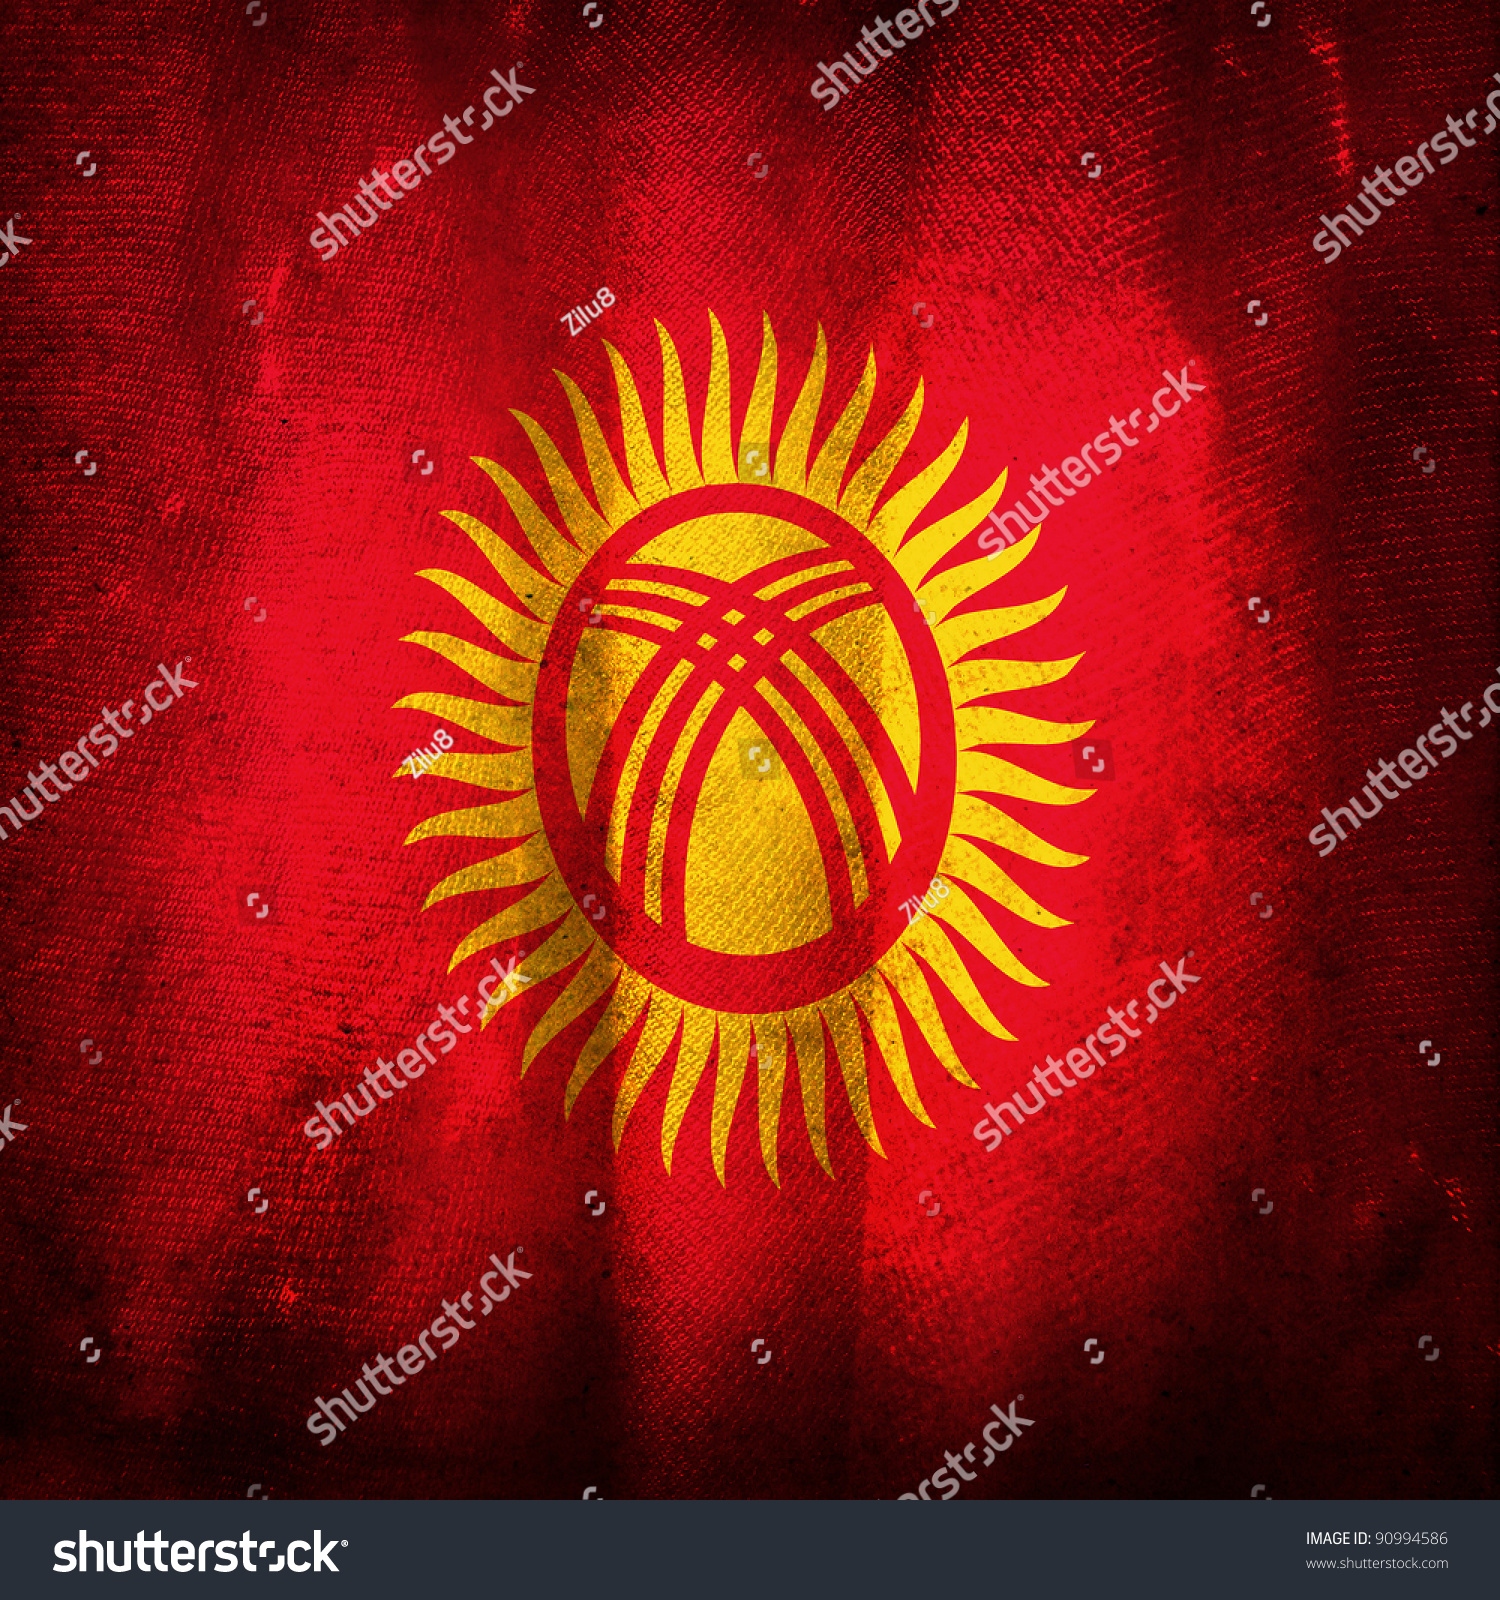 Old Grunge Flag Kyrgyzstan Stock Photo 90994586 - Shutterstock